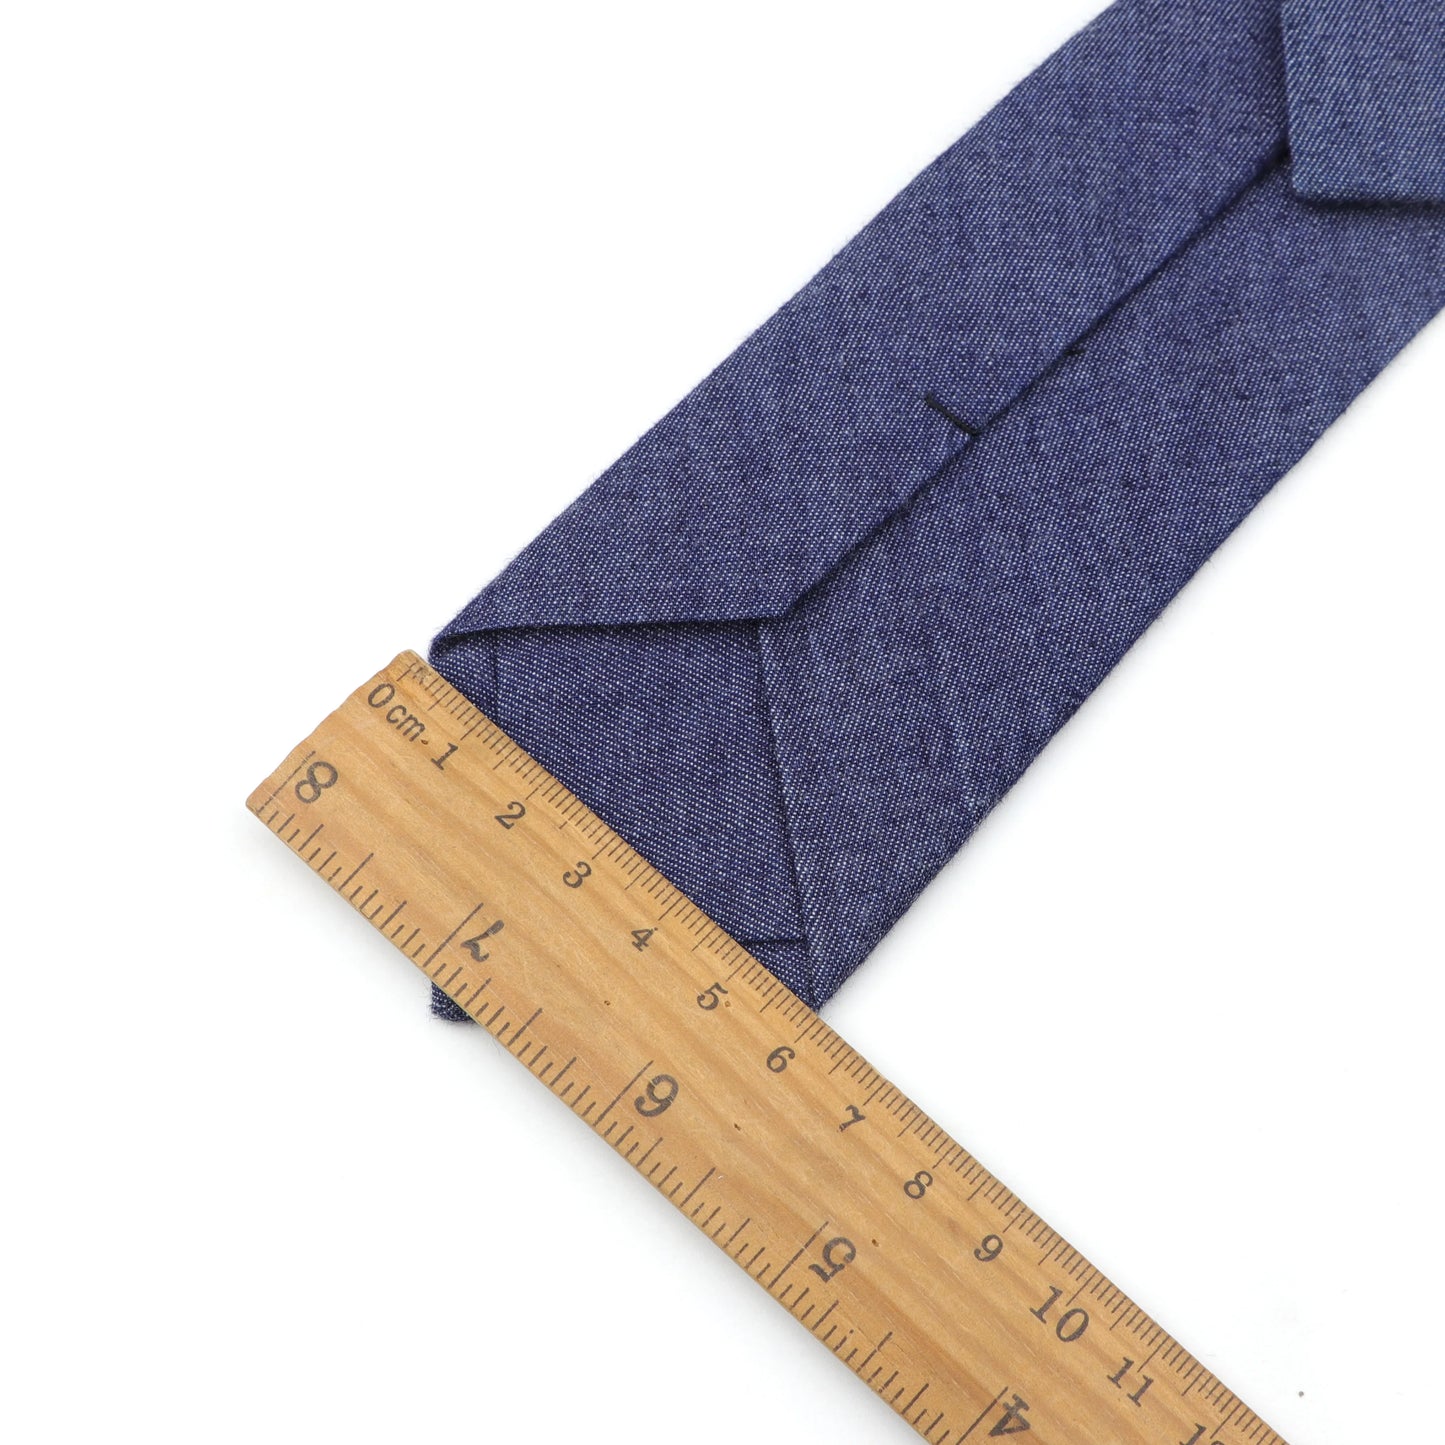 Casual Chic: Linen/Cotton Tie & Clip Set for Leisure & Business